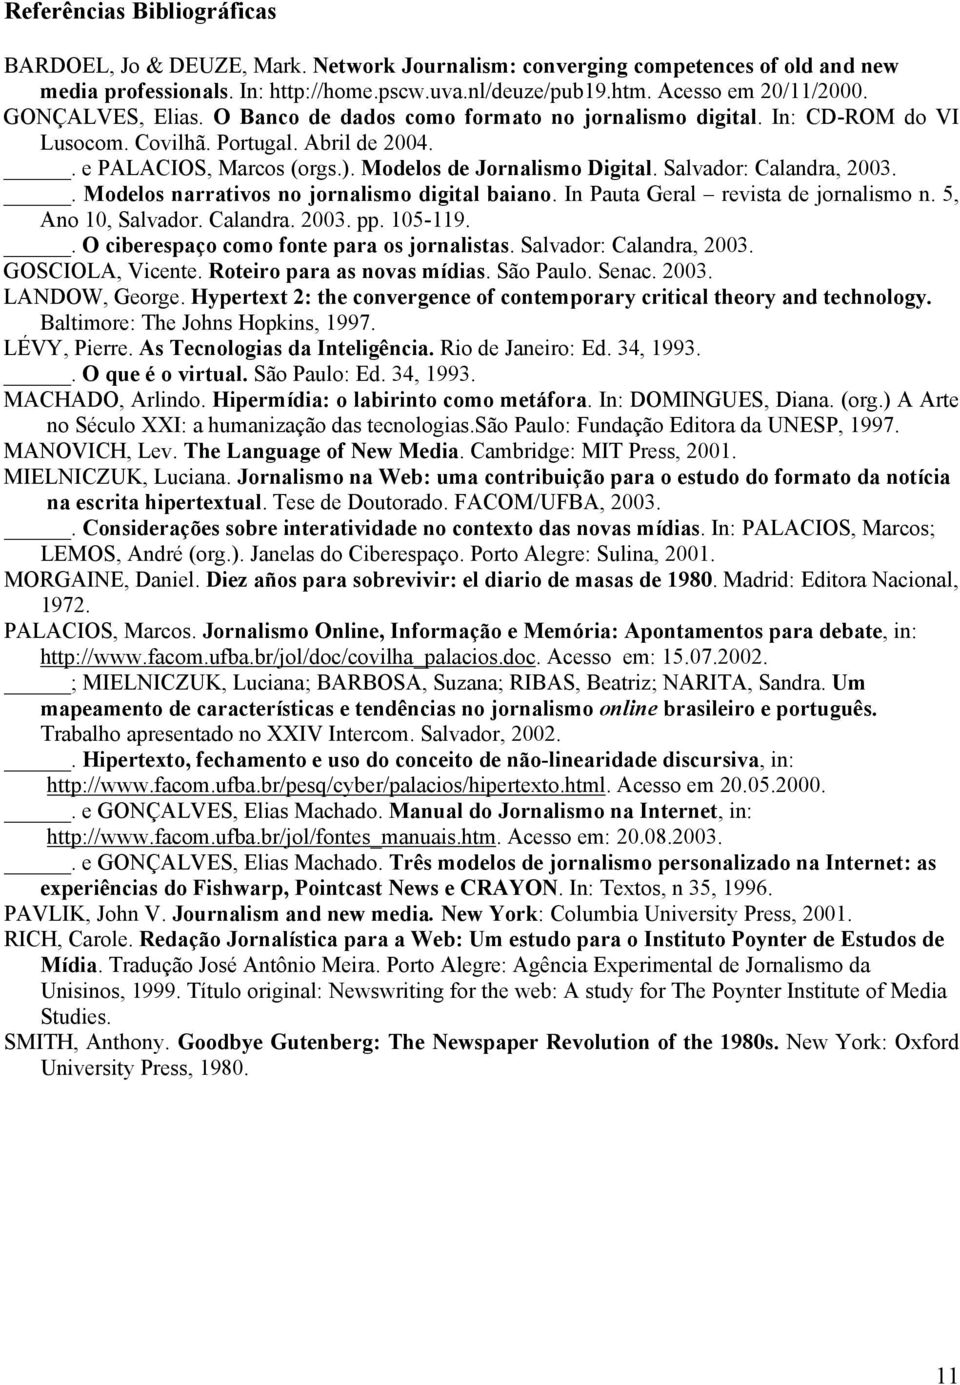 Salvador: Calandra, 2003.. Modelos narrativos no jornalismo digital baiano. In Pauta Geral revista de jornalismo n. 5, Ano 10, Salvador. Calandra. 2003. pp. 105-119.